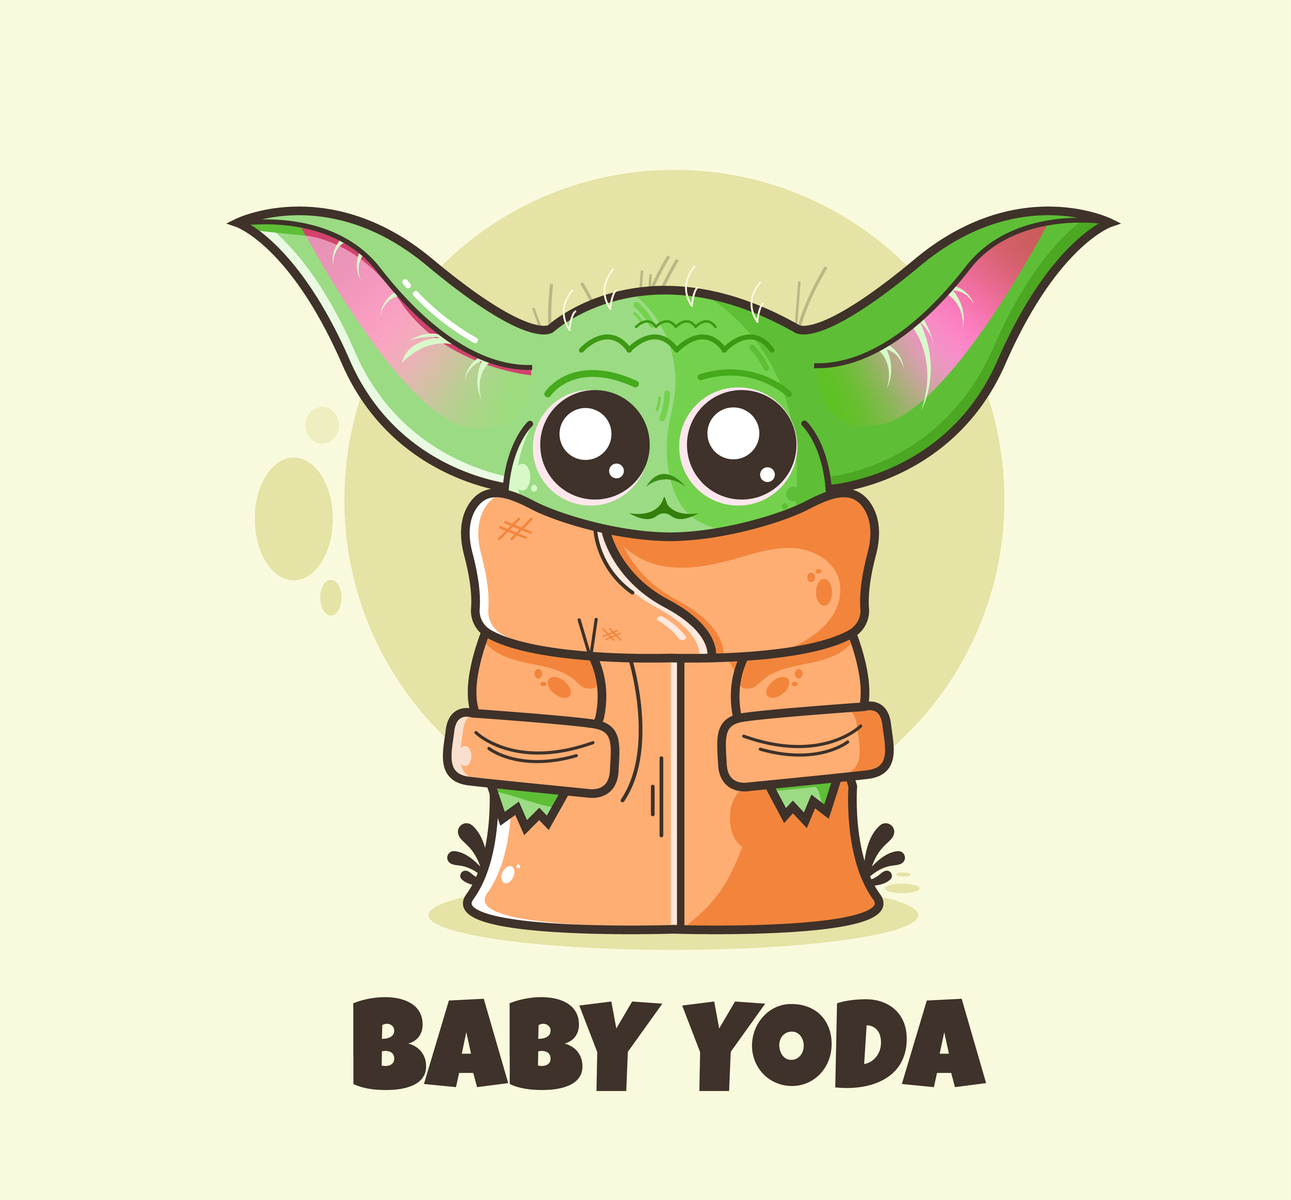 Baby Yoda Illustration by Lukasz Adam on Dribbble